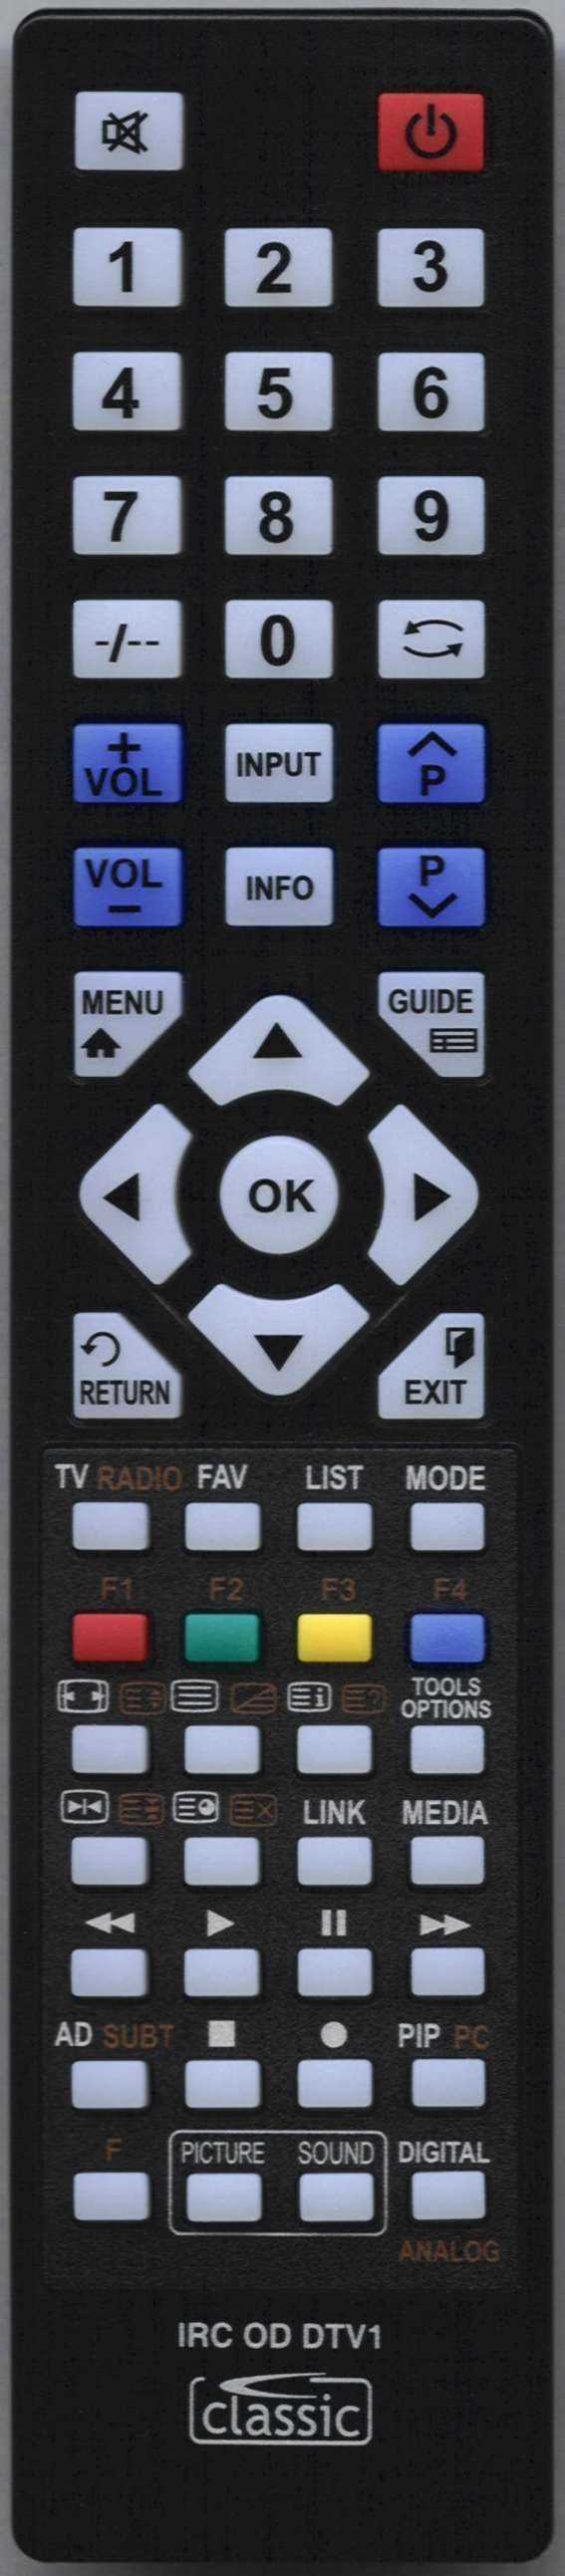 UMC X19/14B-GB-TCD-UK Remote Control